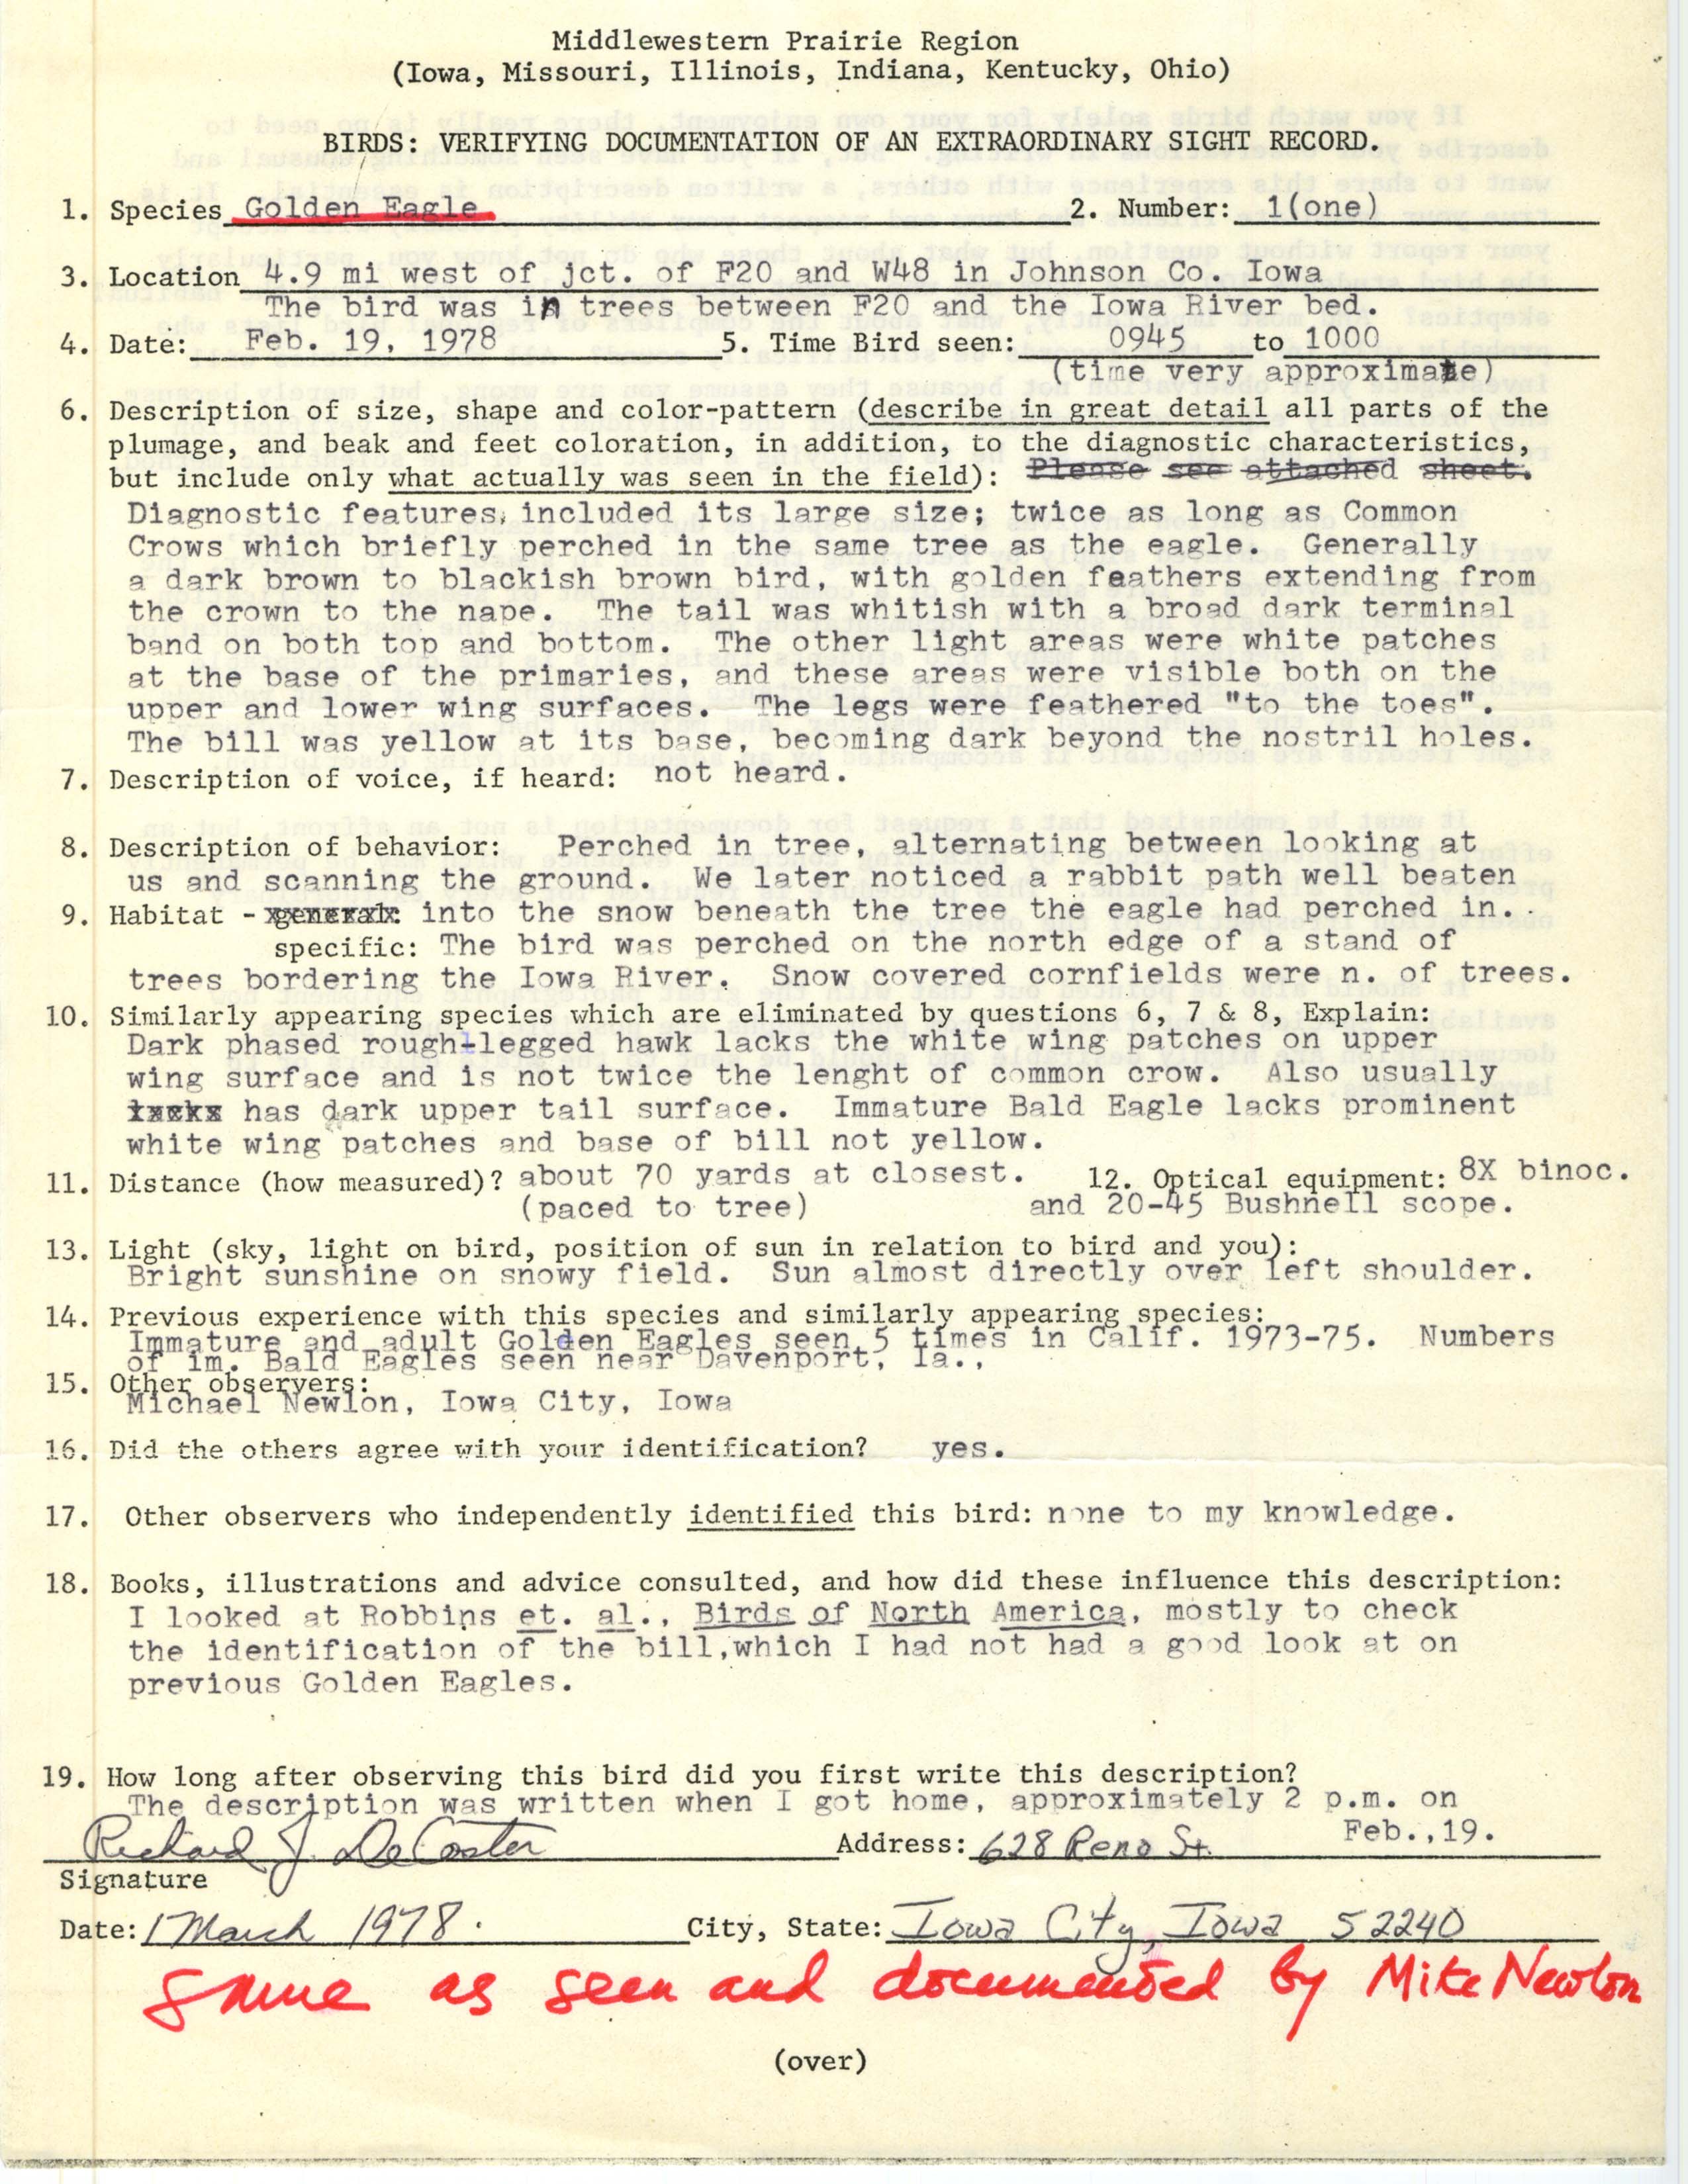 Rare bird documentation form for Golden Eagle at Johnson County, 1978